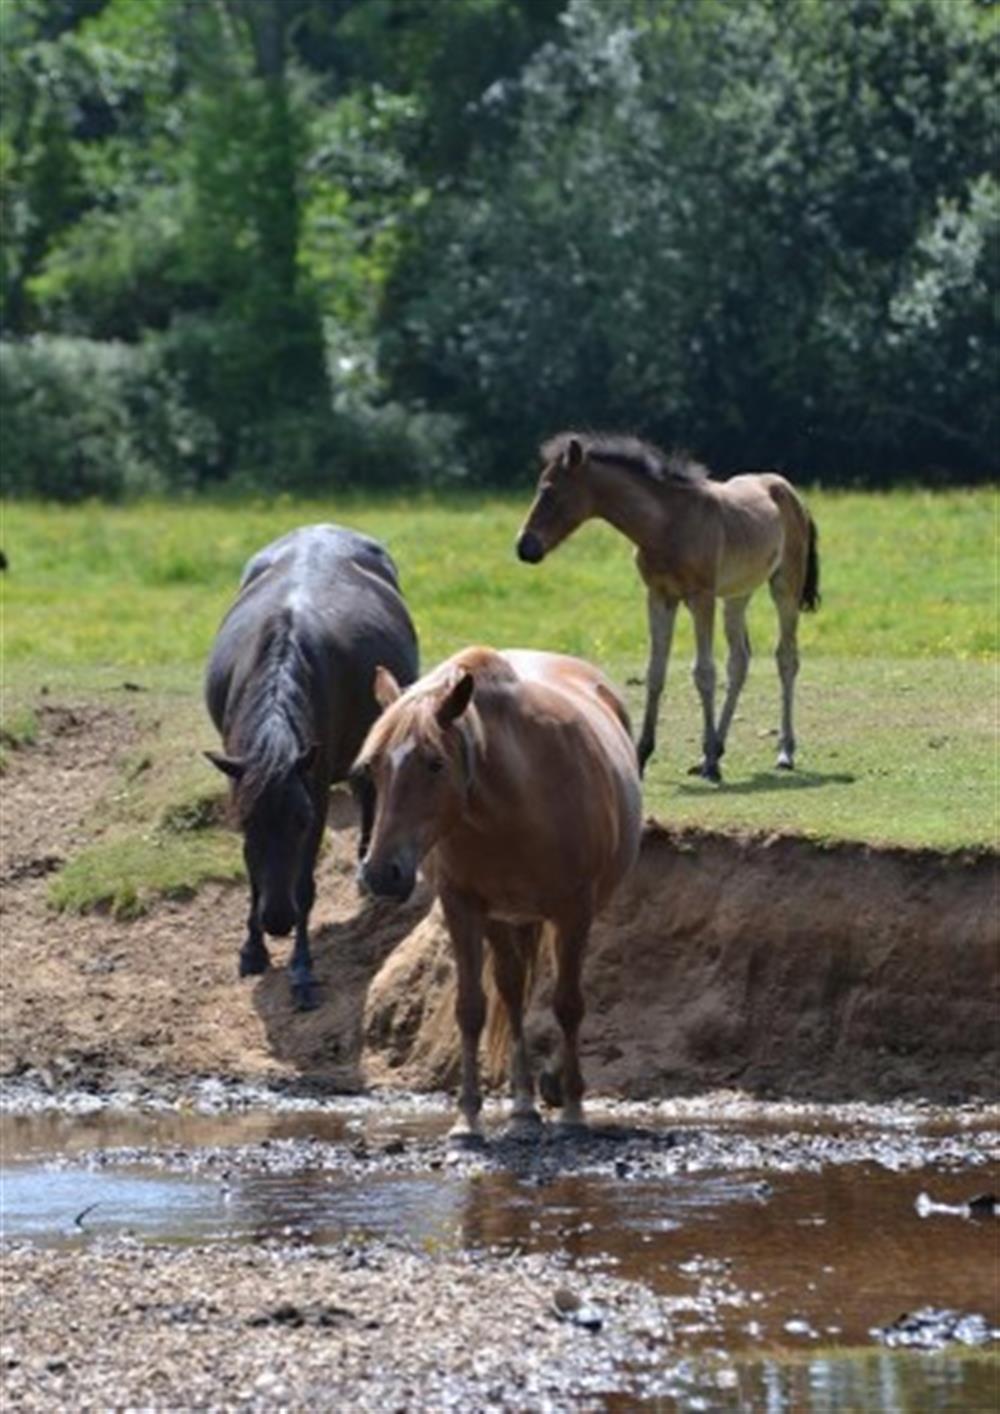 Ponies at Balmer Lawn, Brockenhurst at Corcaigh in Lymington